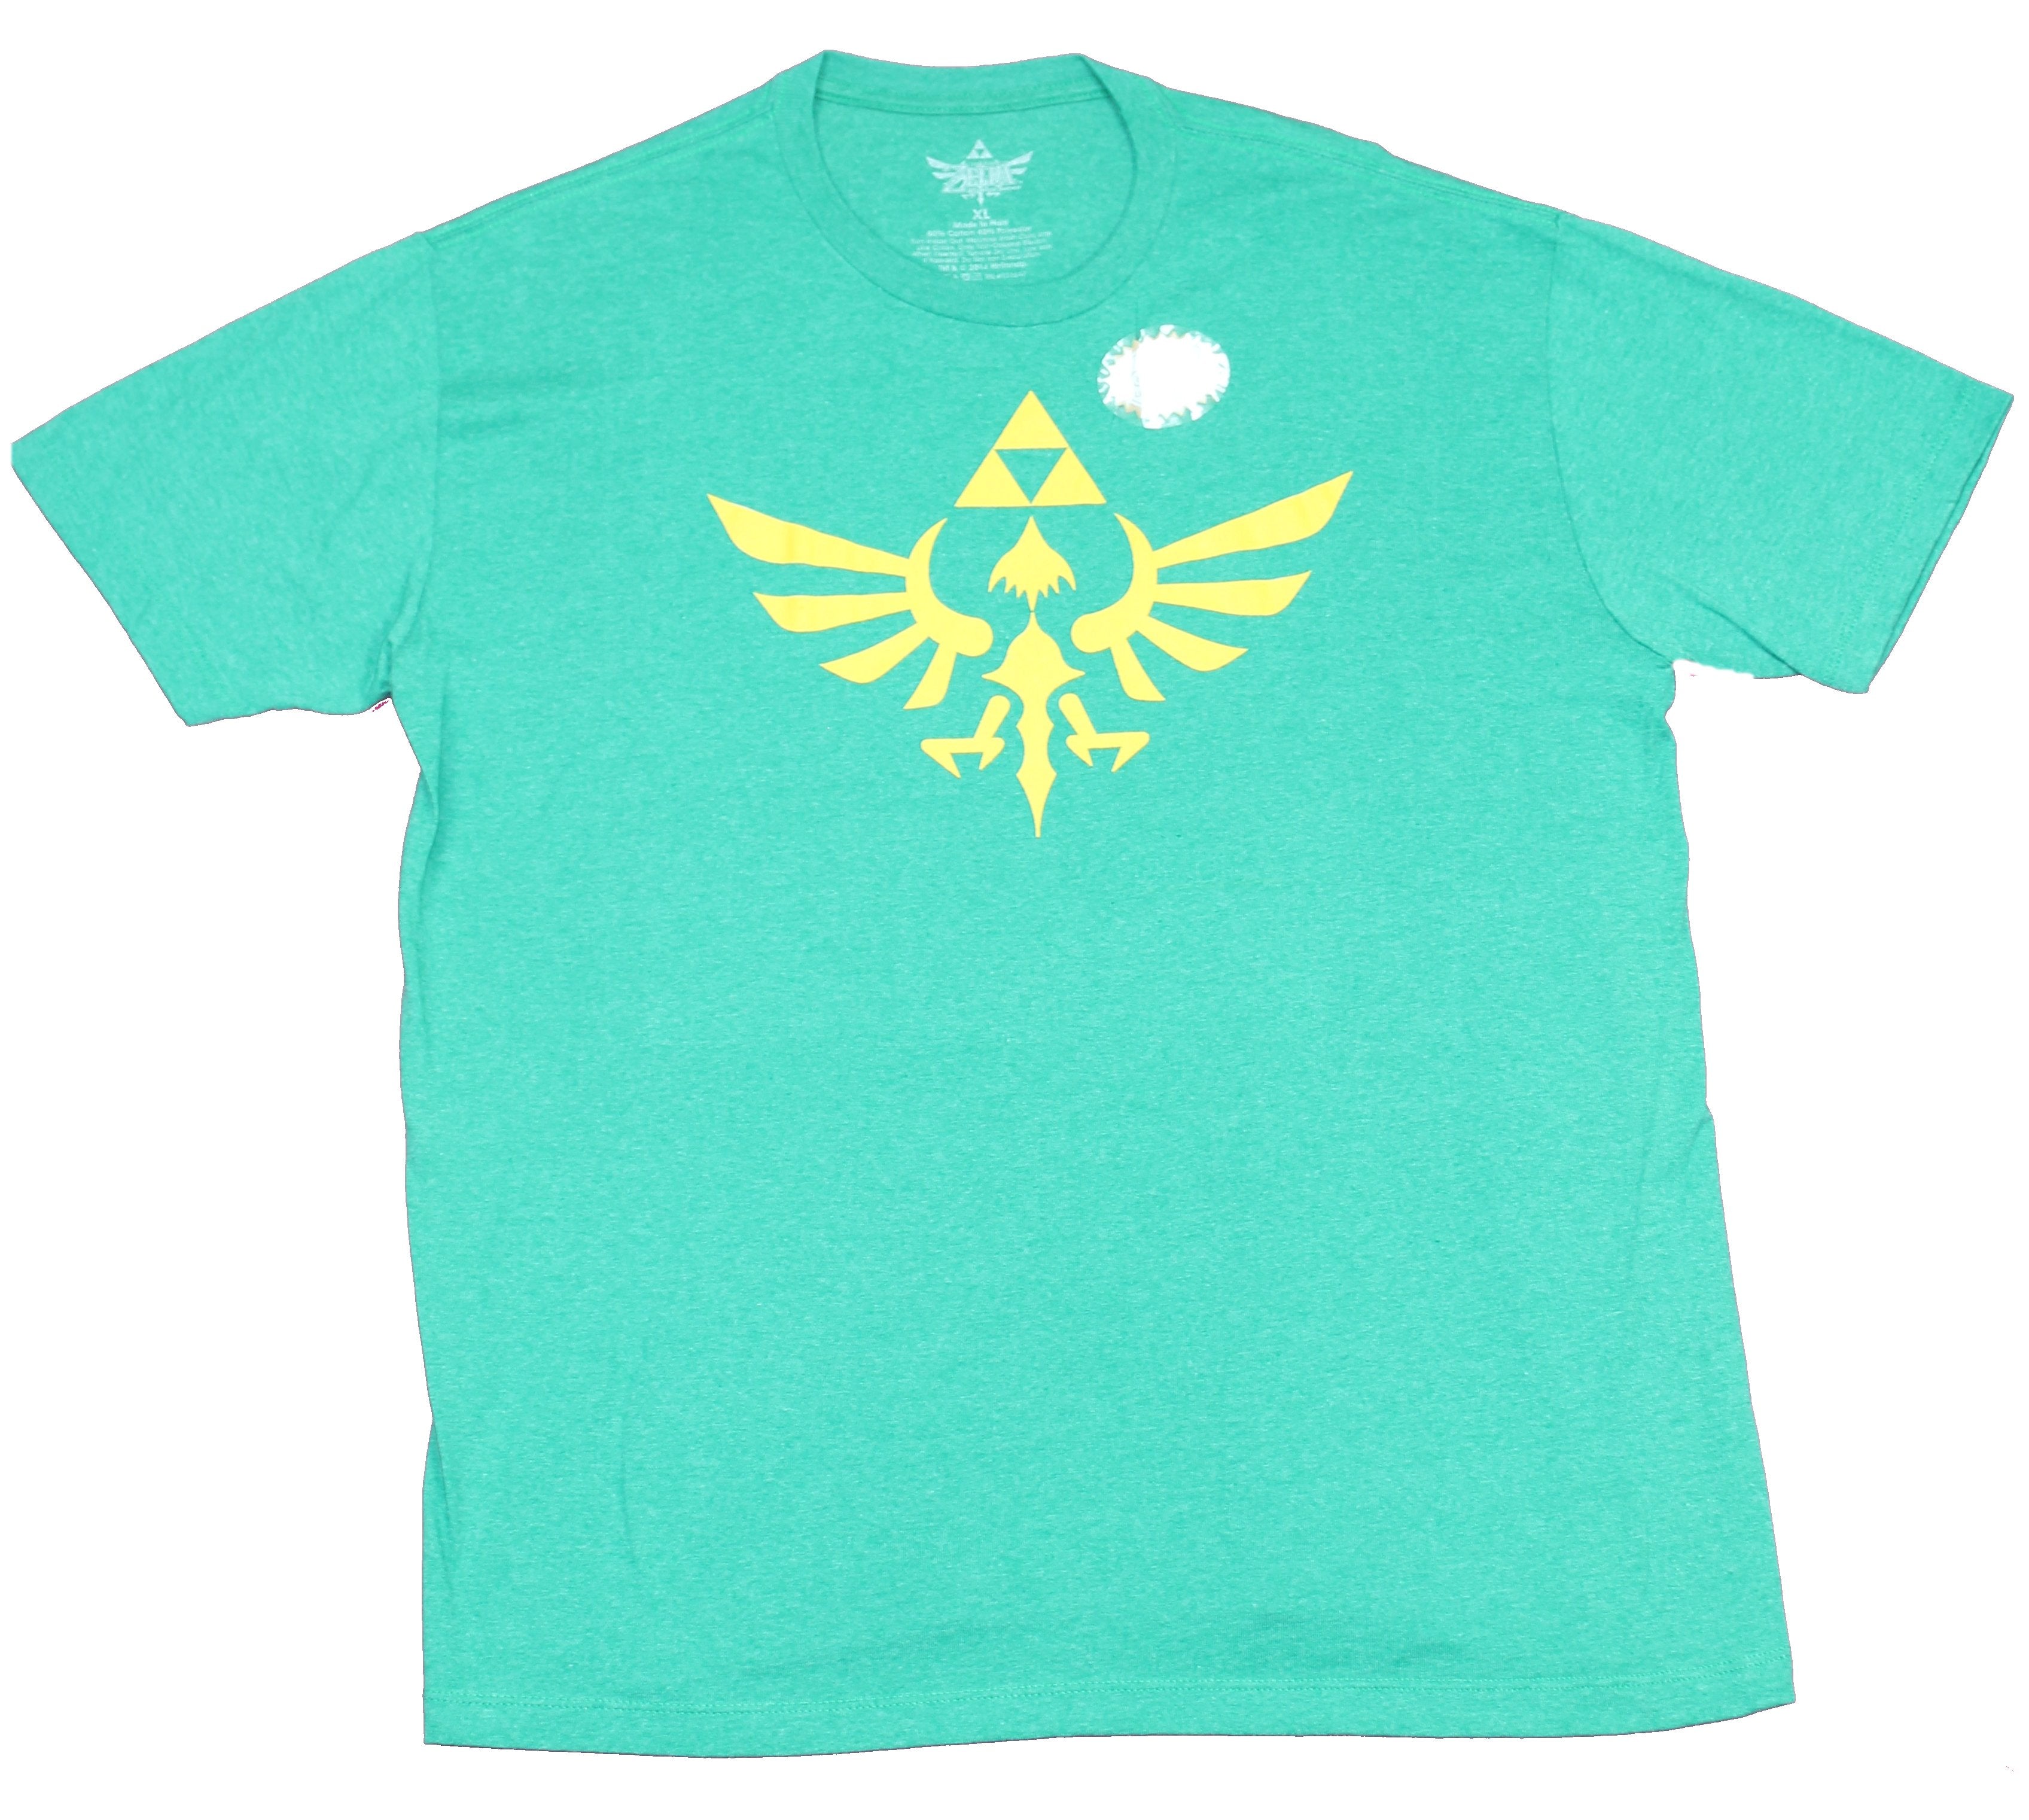 Legend of Zelda Mens T-Shirt - Classic Solid Print Yellow Triforce Image